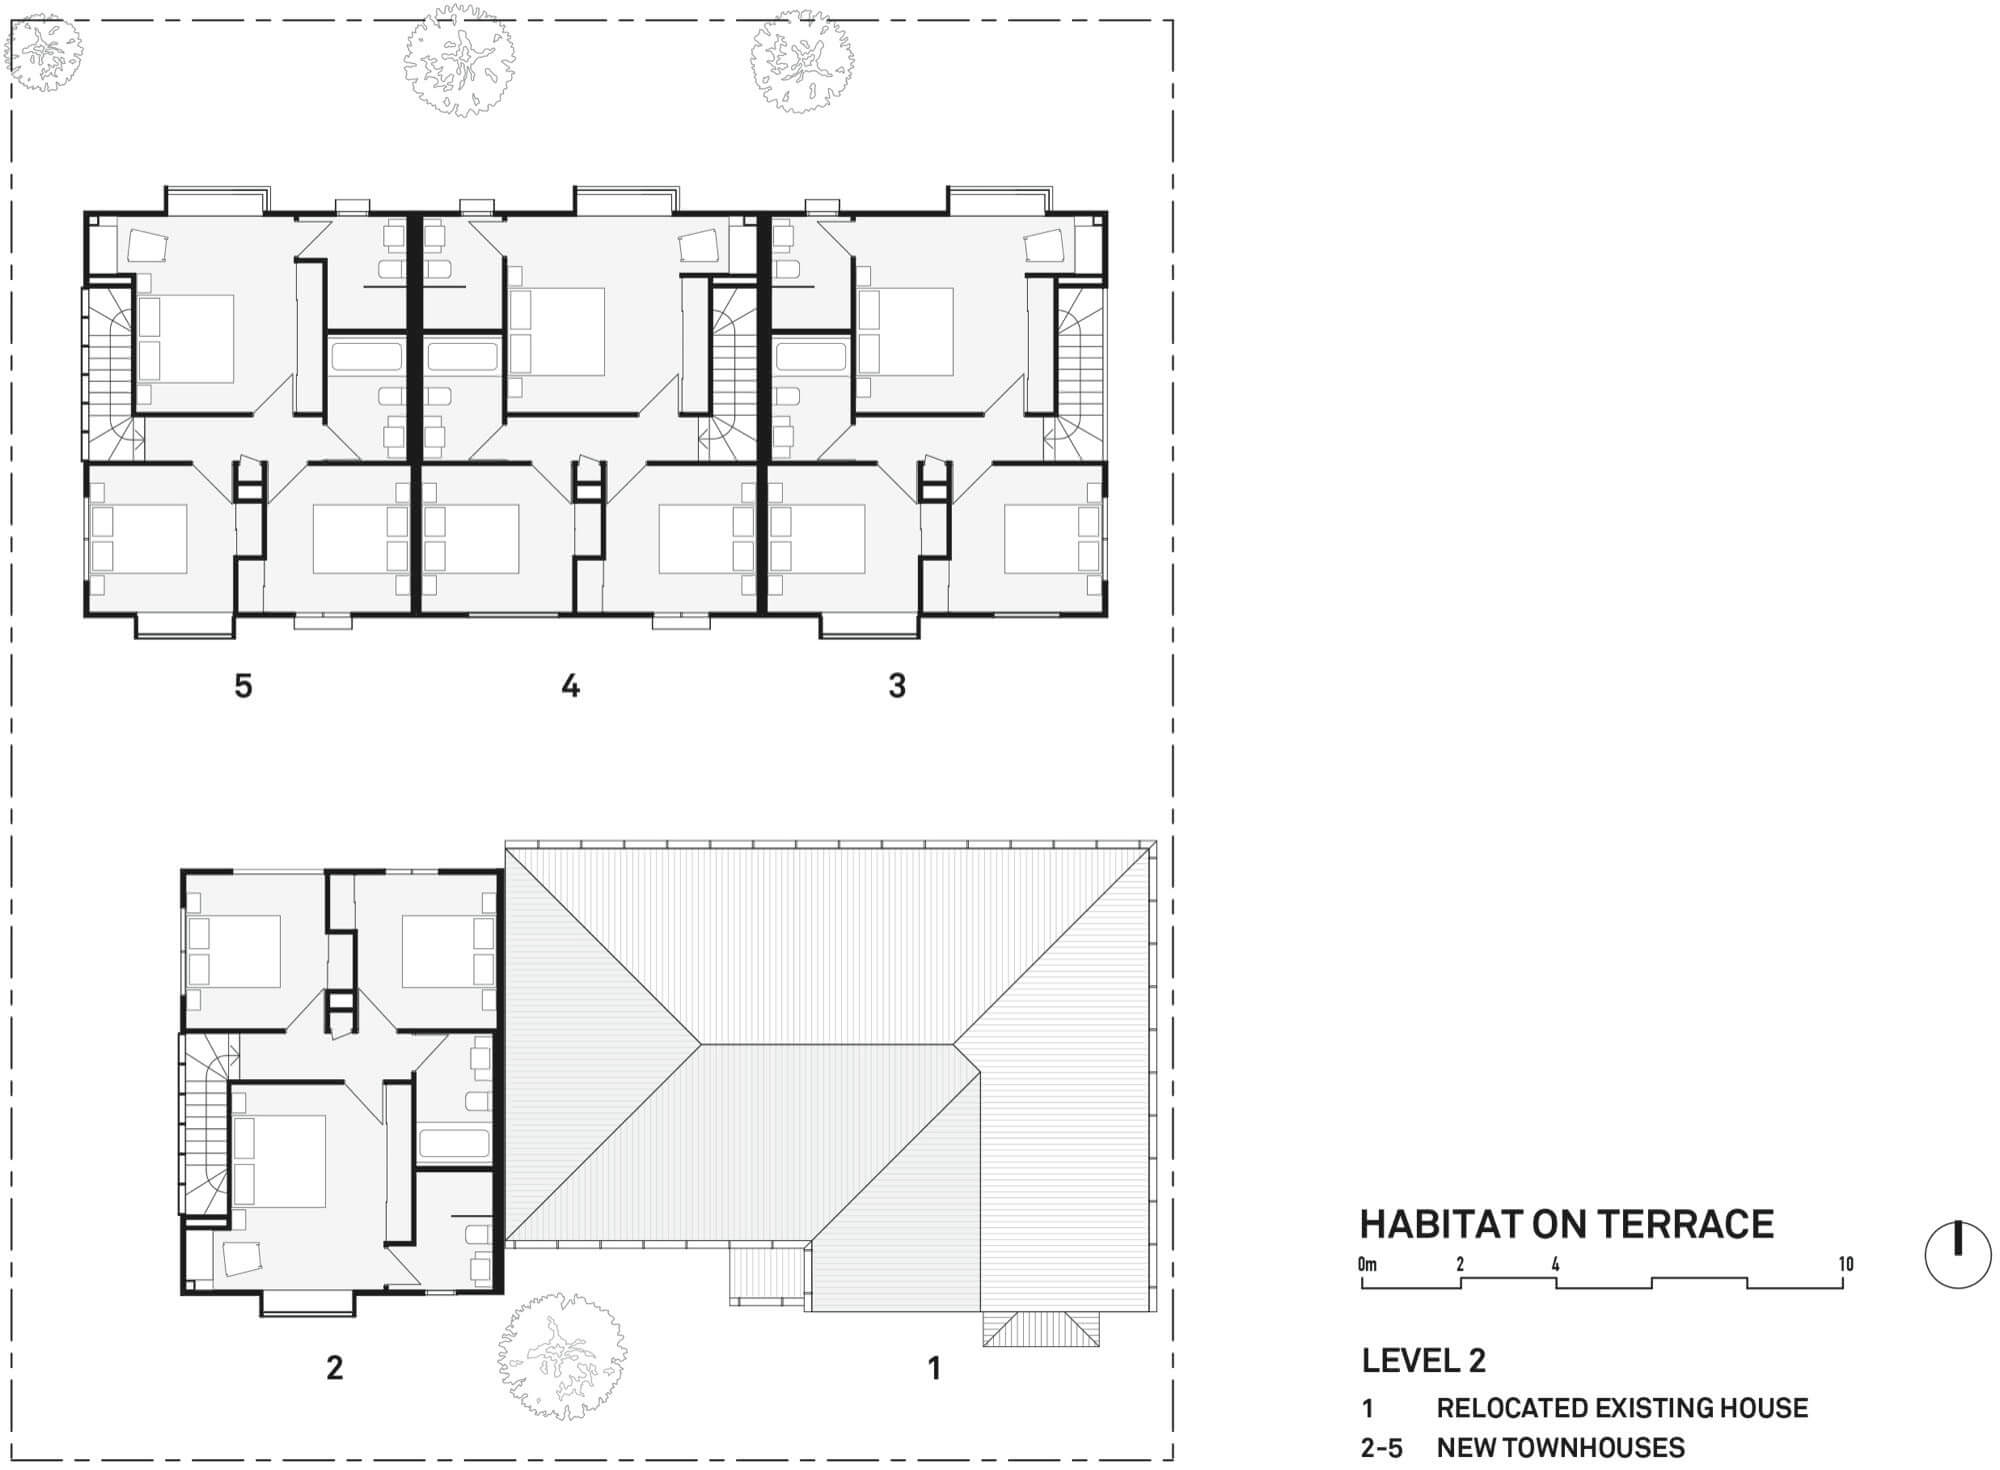 Habitat on Terrace [H.O.T.] by refresh*design